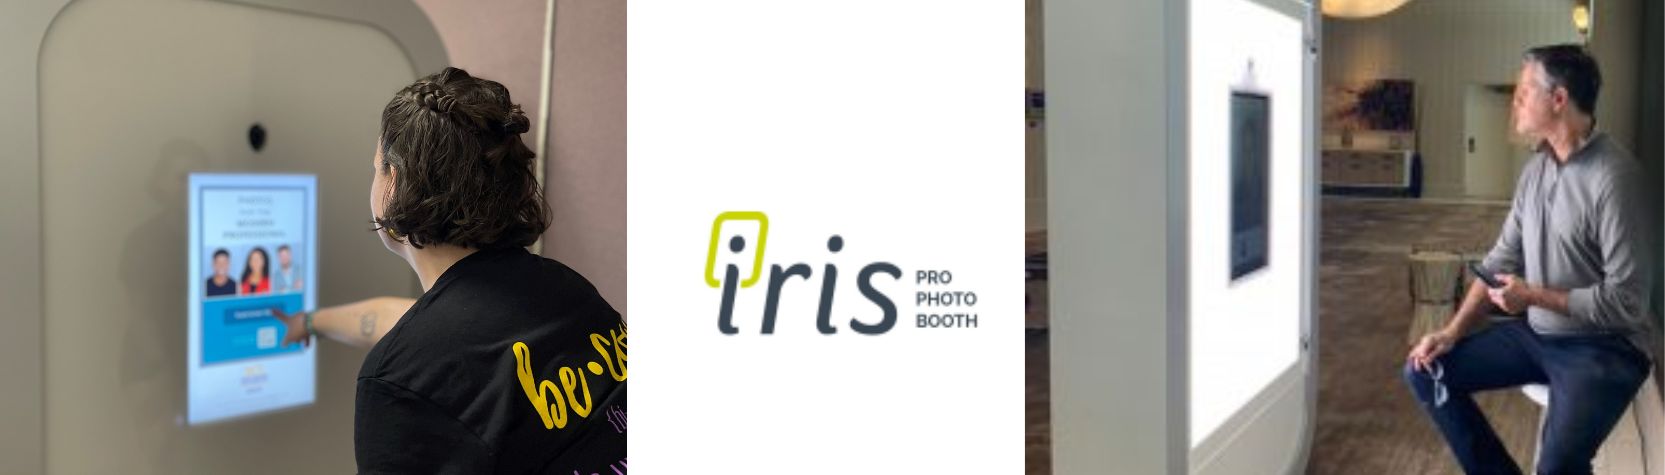 IRIS Photo Booth